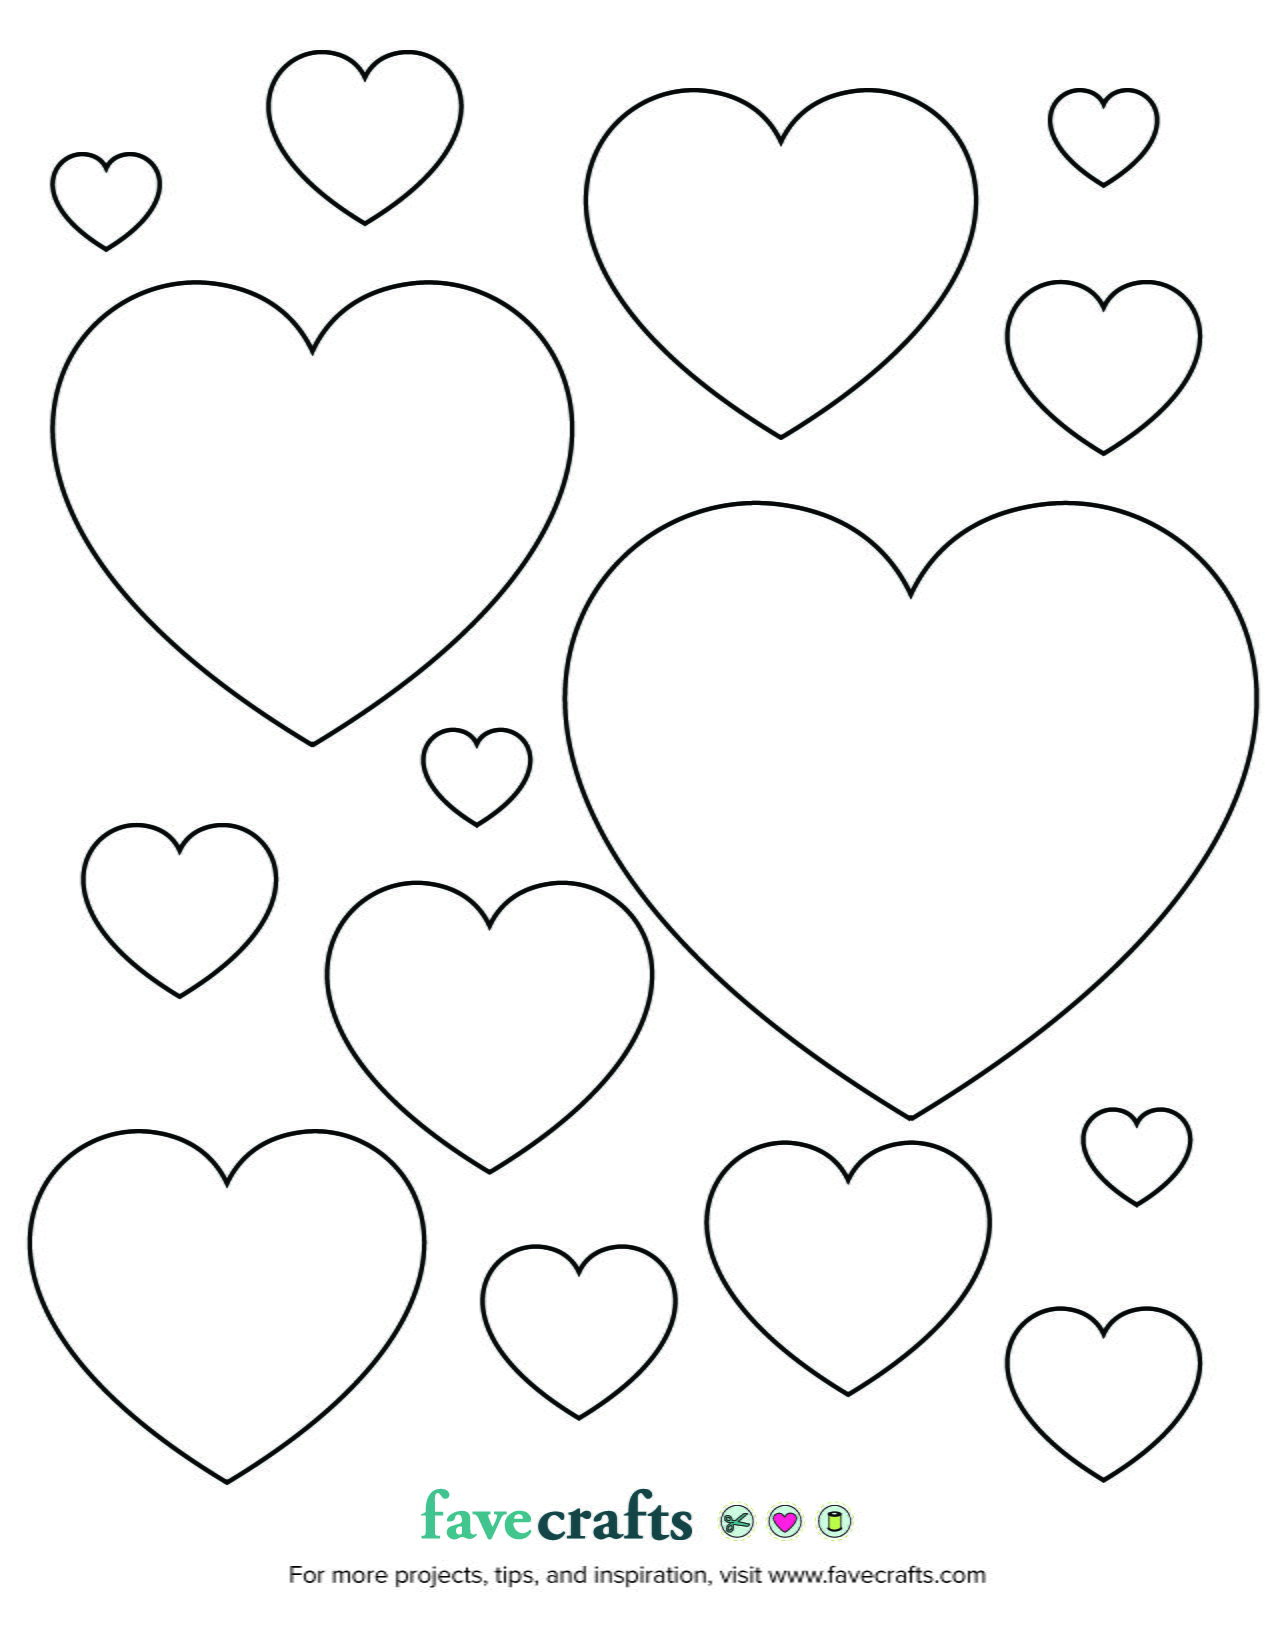 printable-hearts-to-color-pdf-download-favecrafts